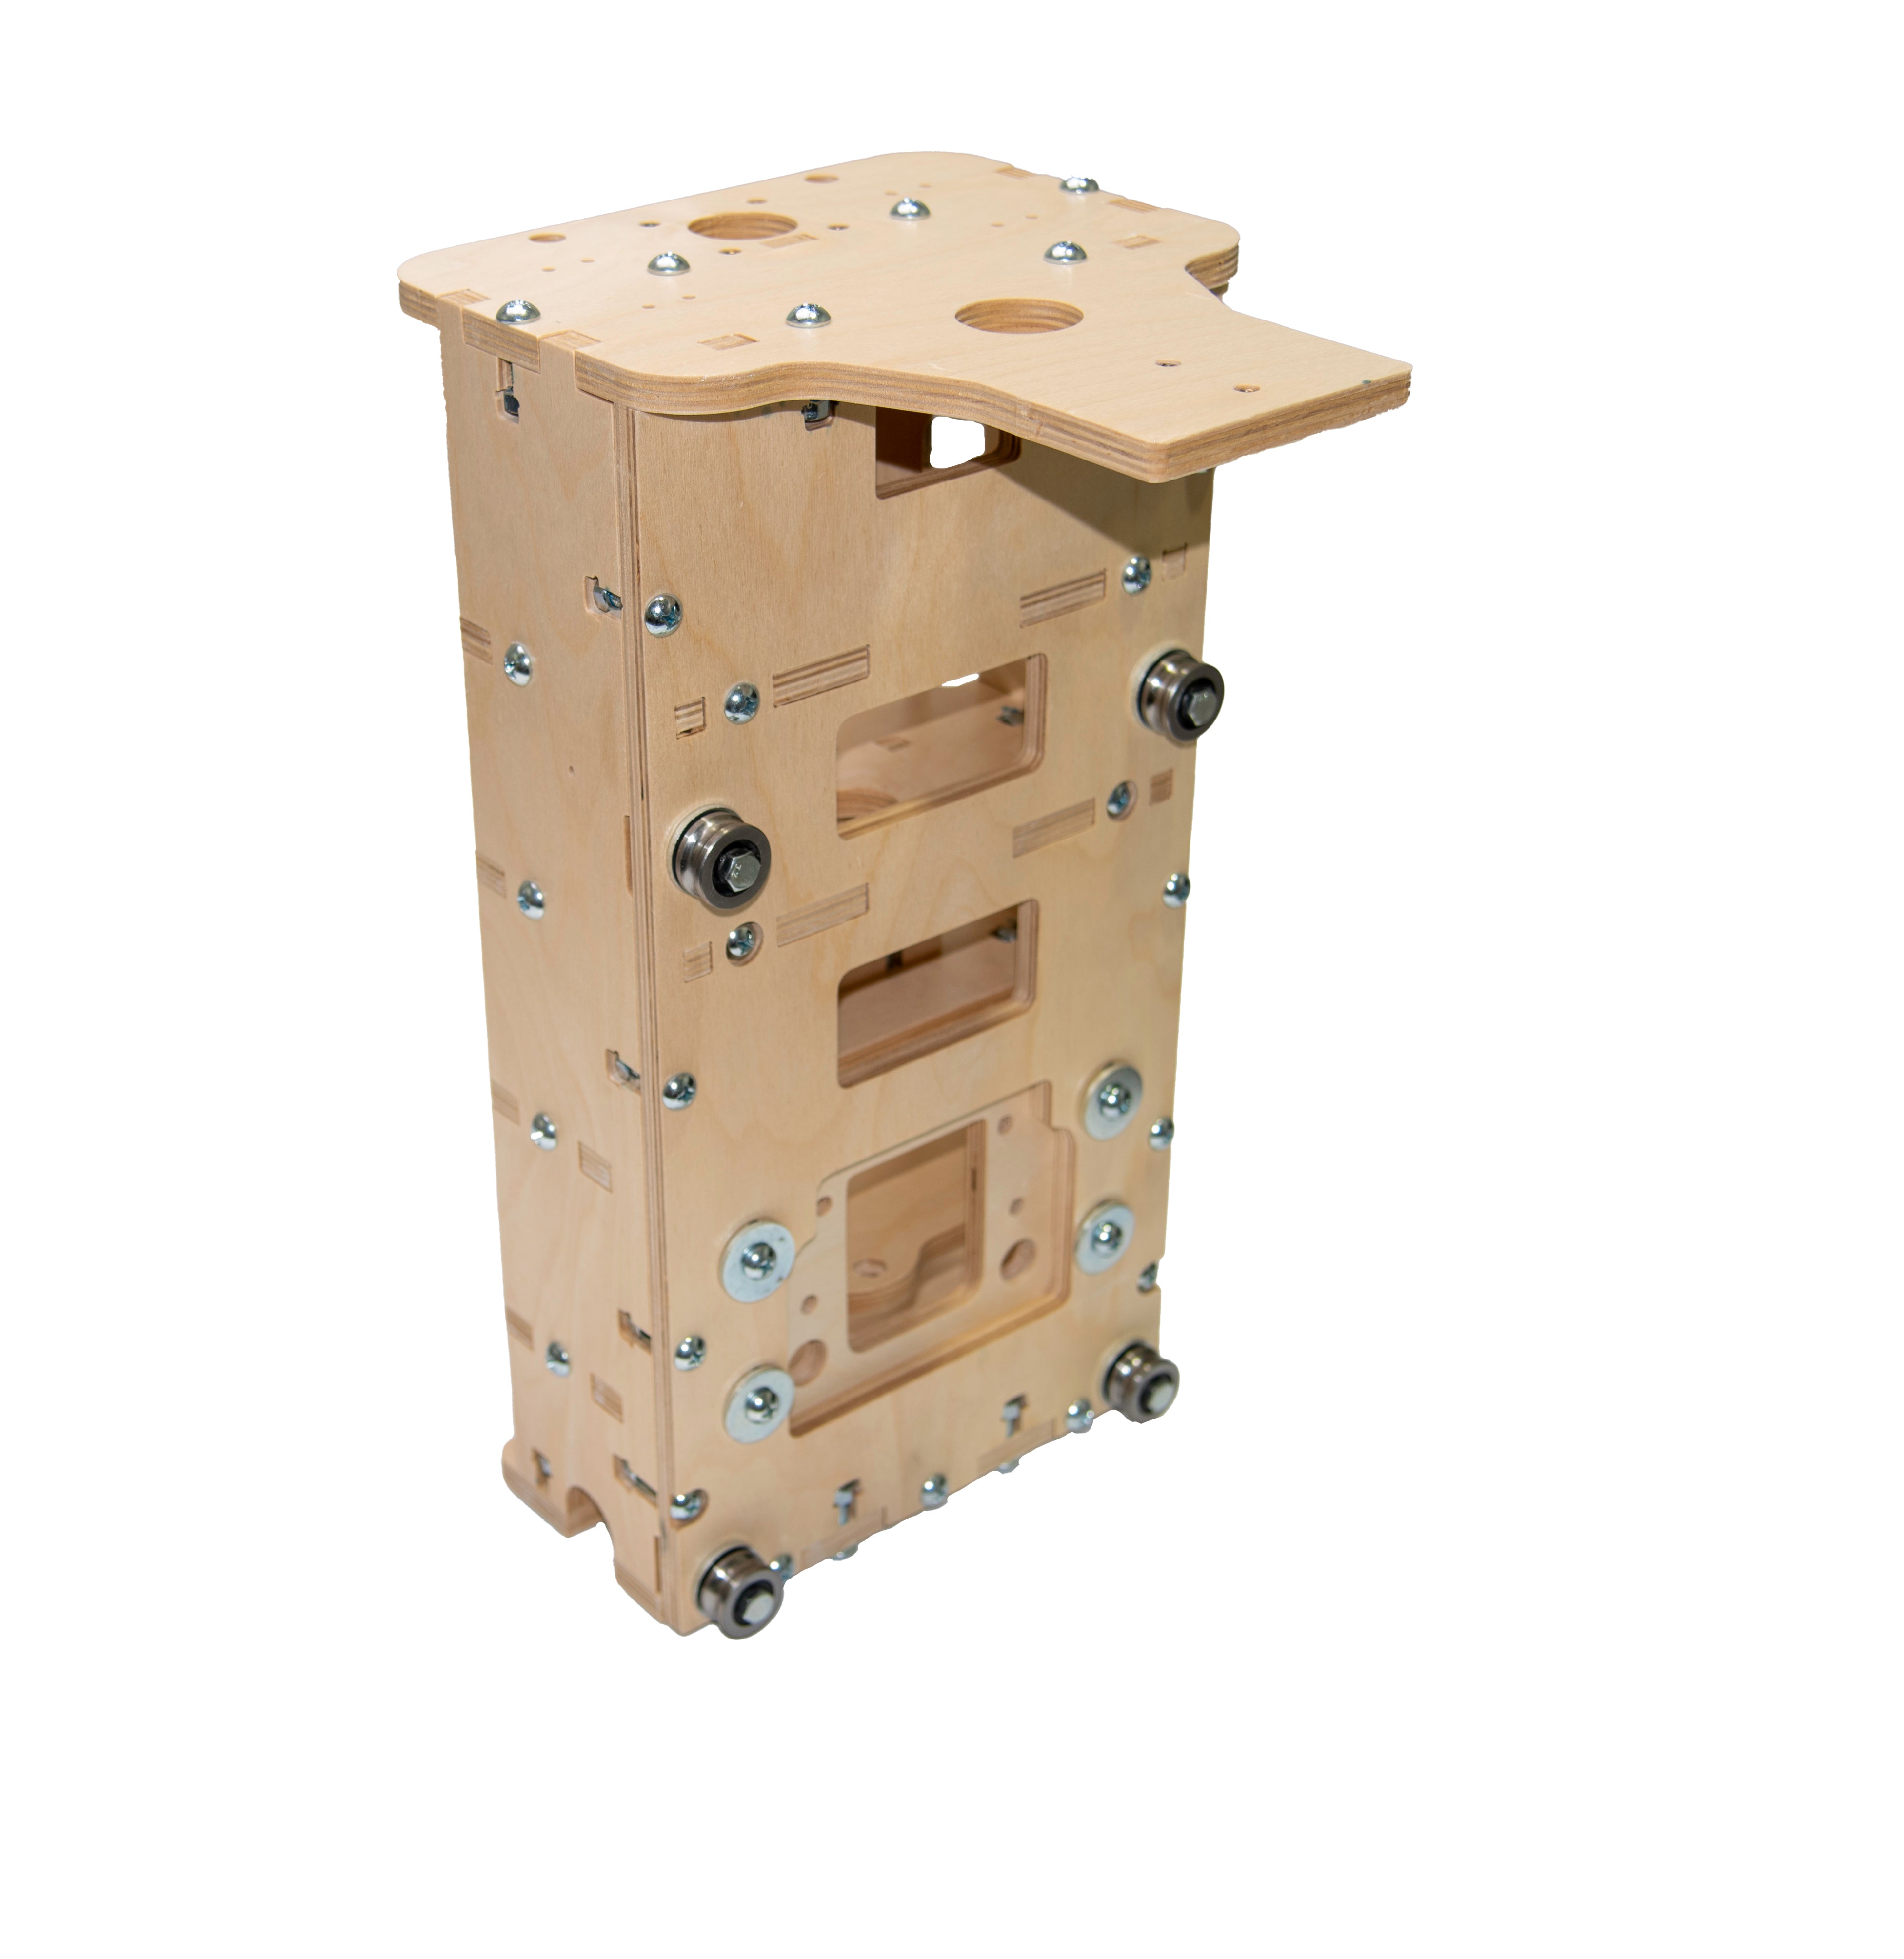 KL7-Series Controller Wooden Box Kit